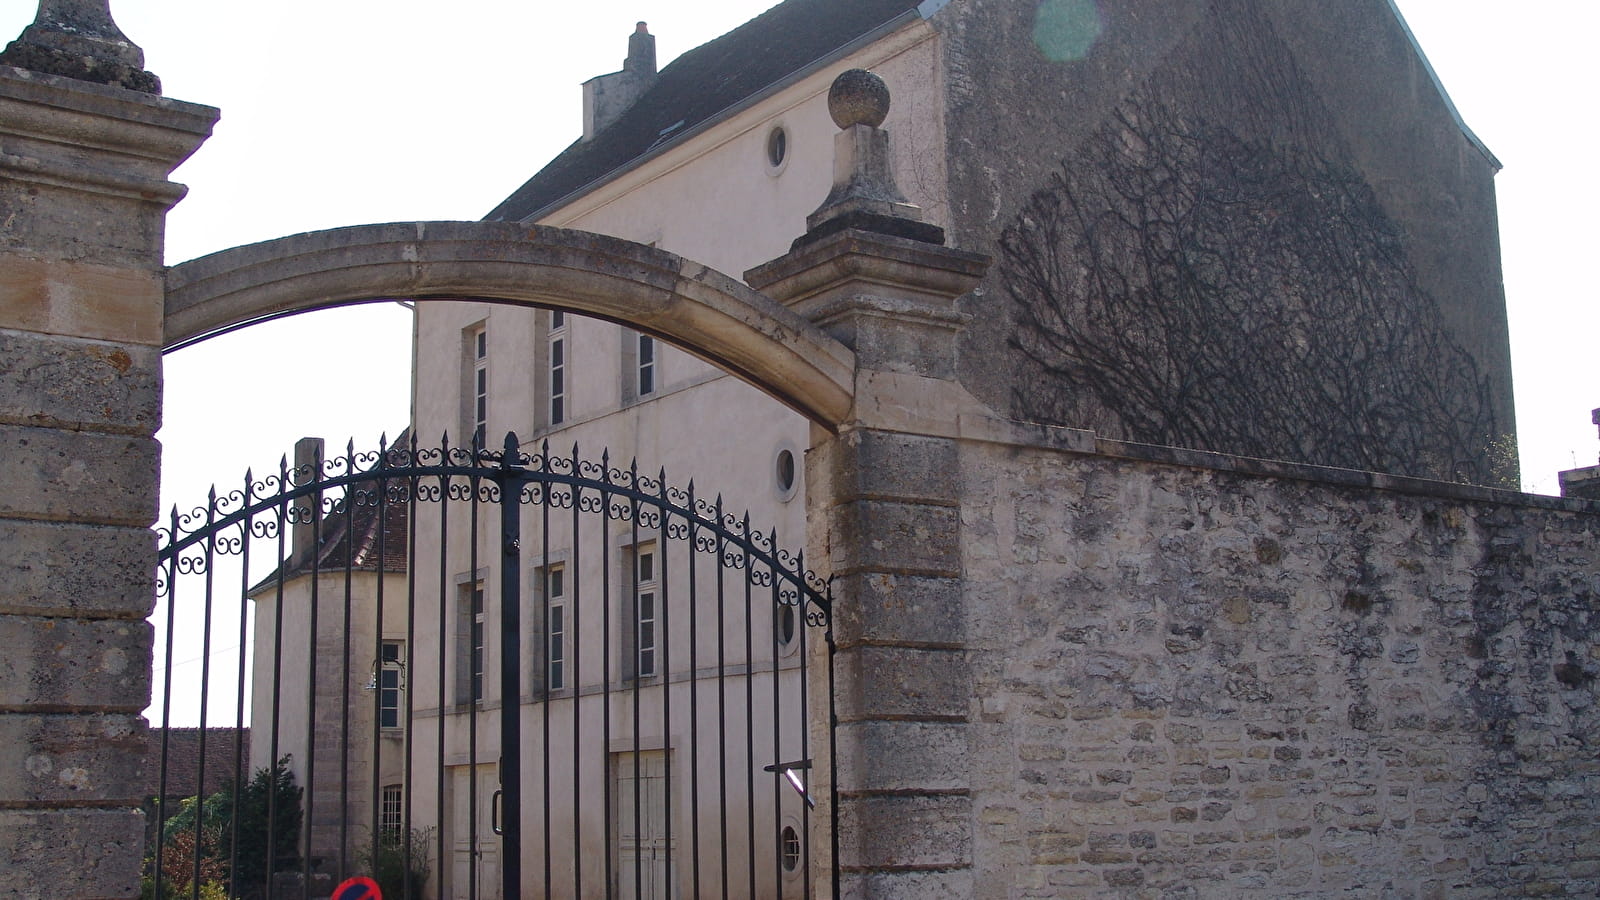 Château 